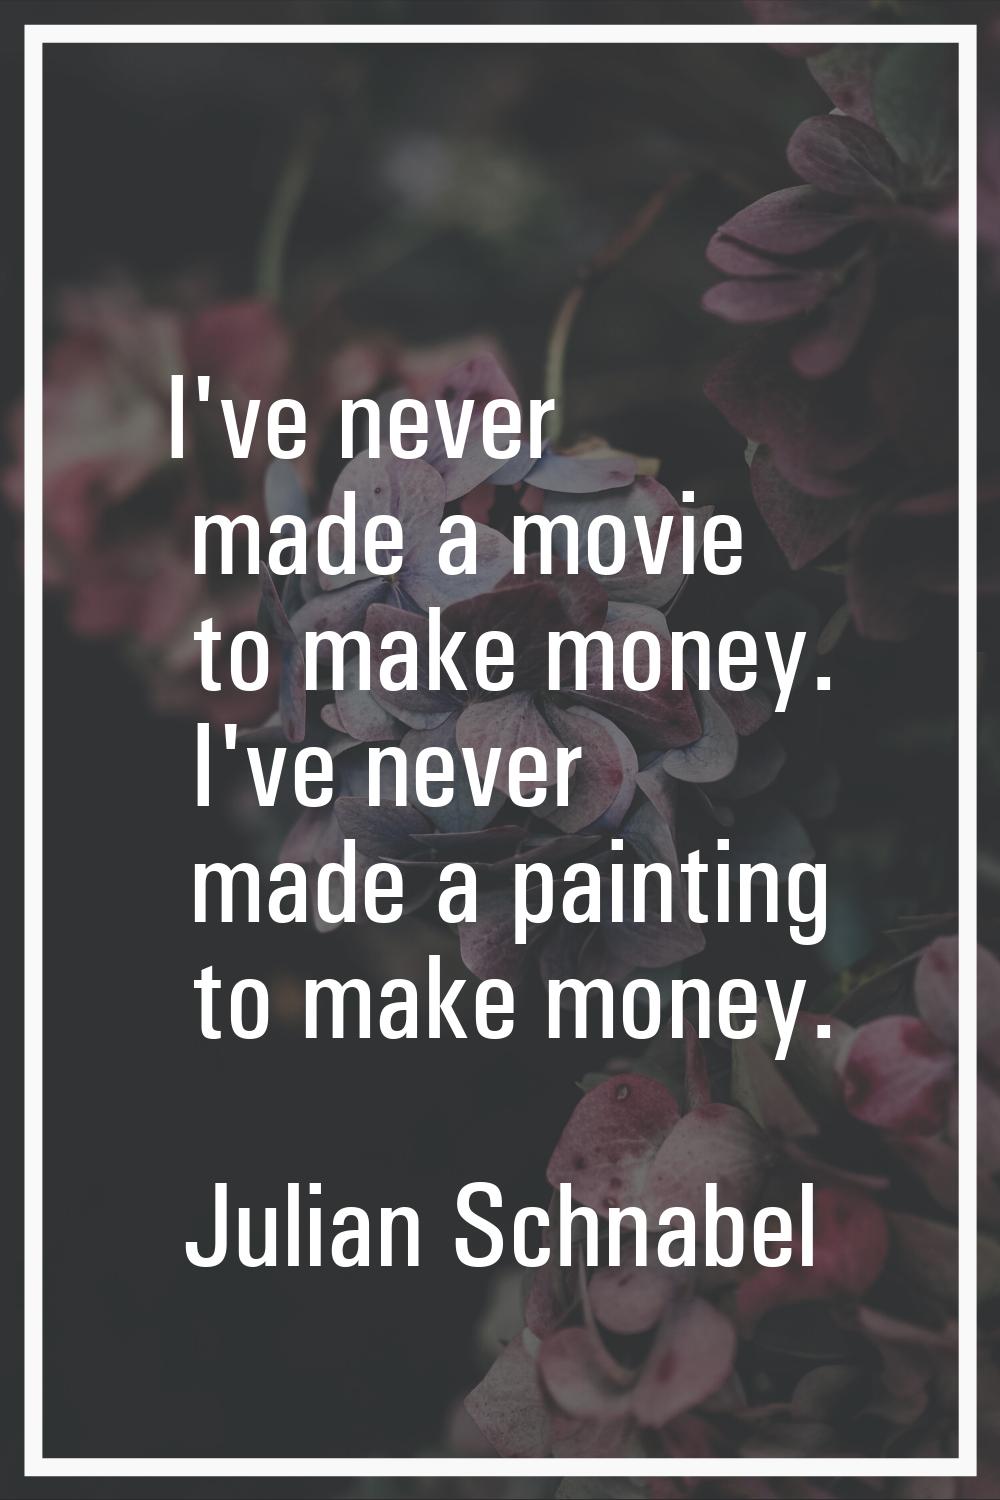 I've never made a movie to make money. I've never made a painting to make money.